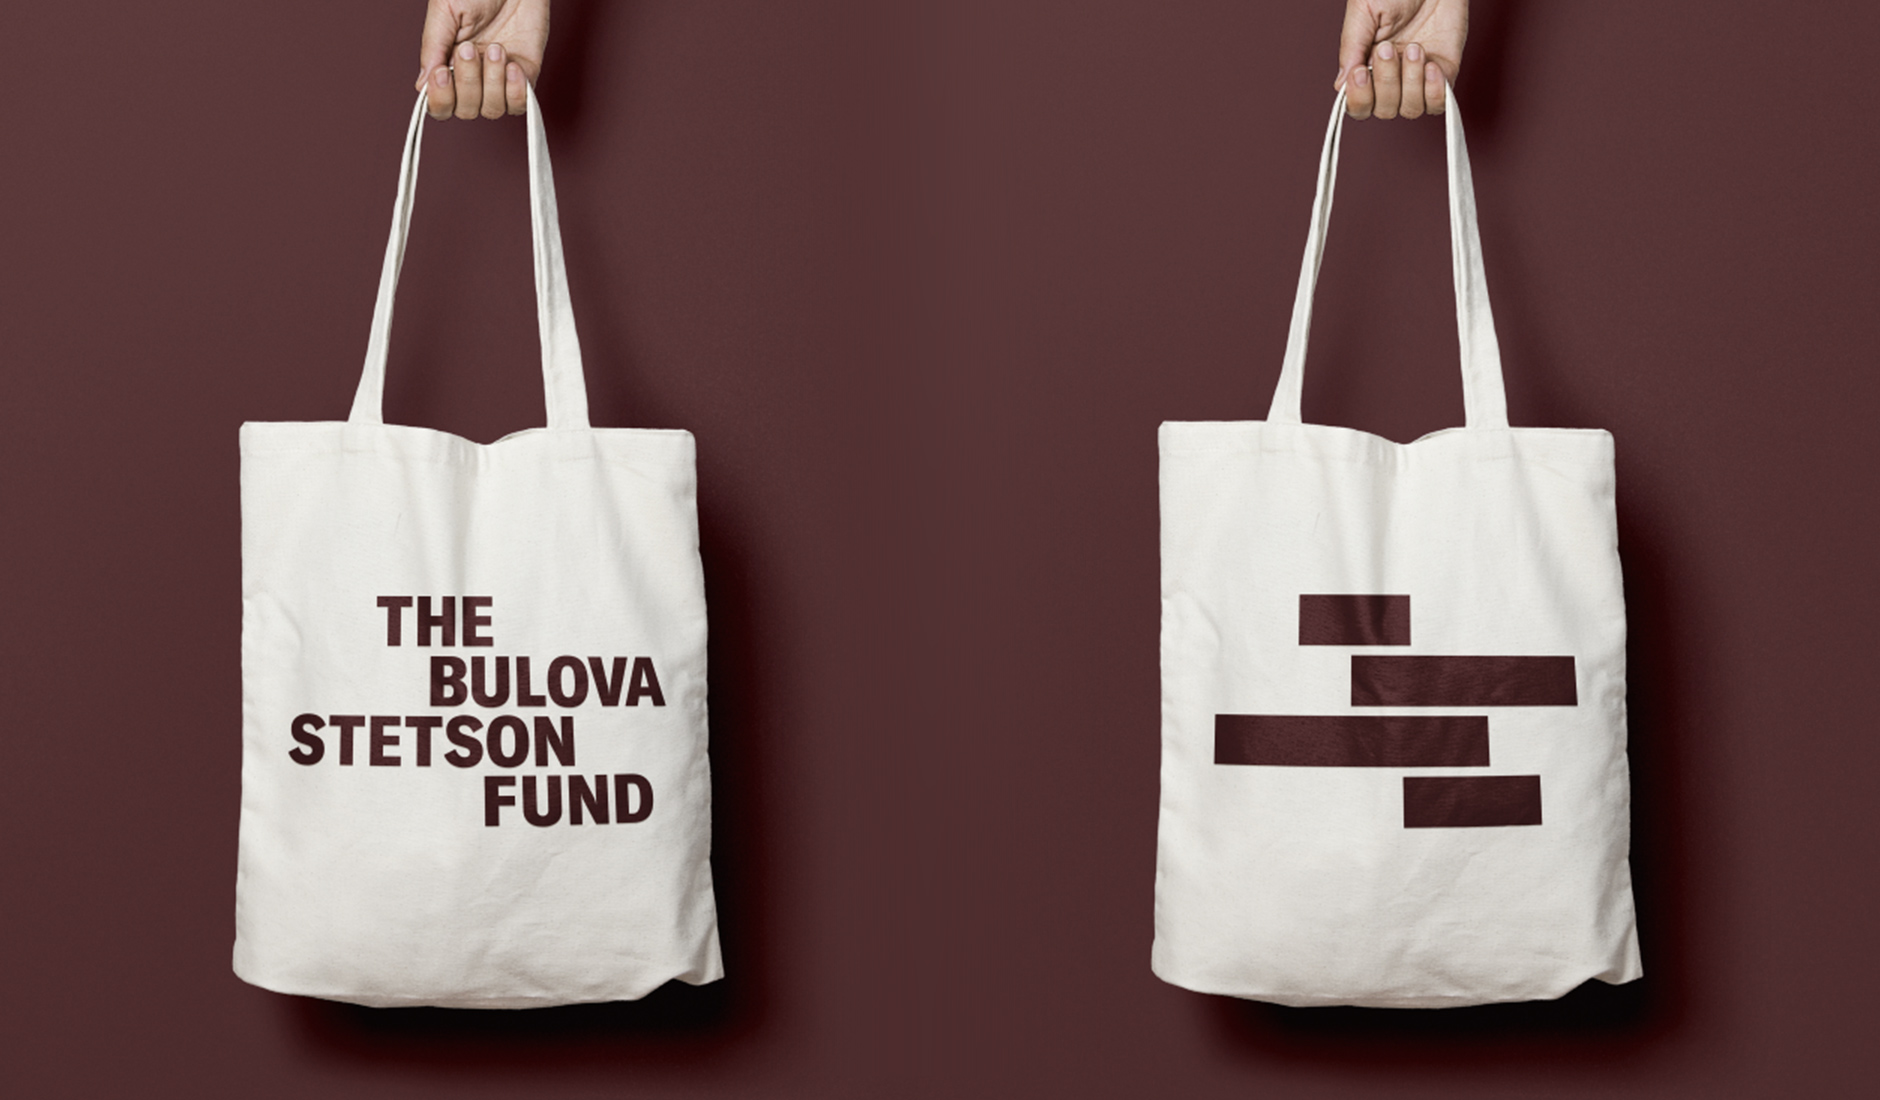 The Bulova Stetson Fund Identity